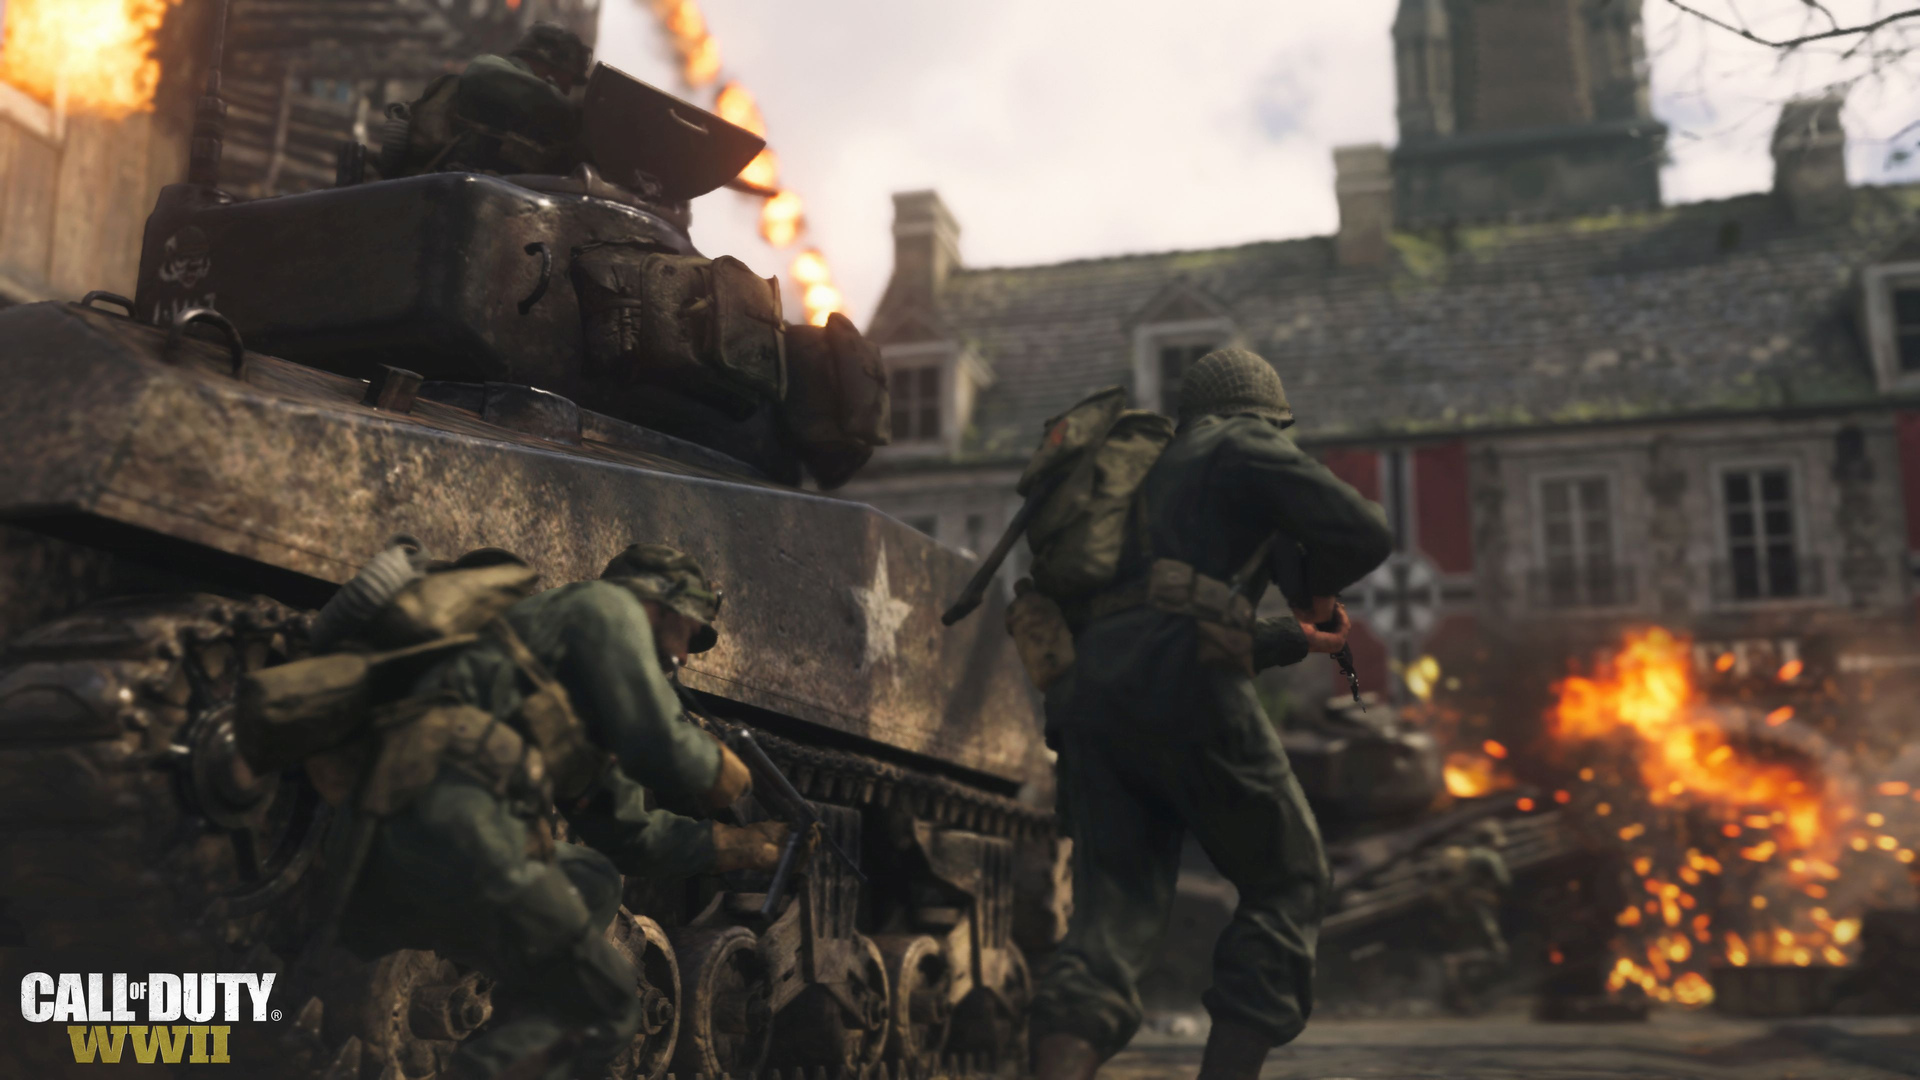 Detaily o mitrotransakcích a eSportu v Call of Duty: WWII 146070